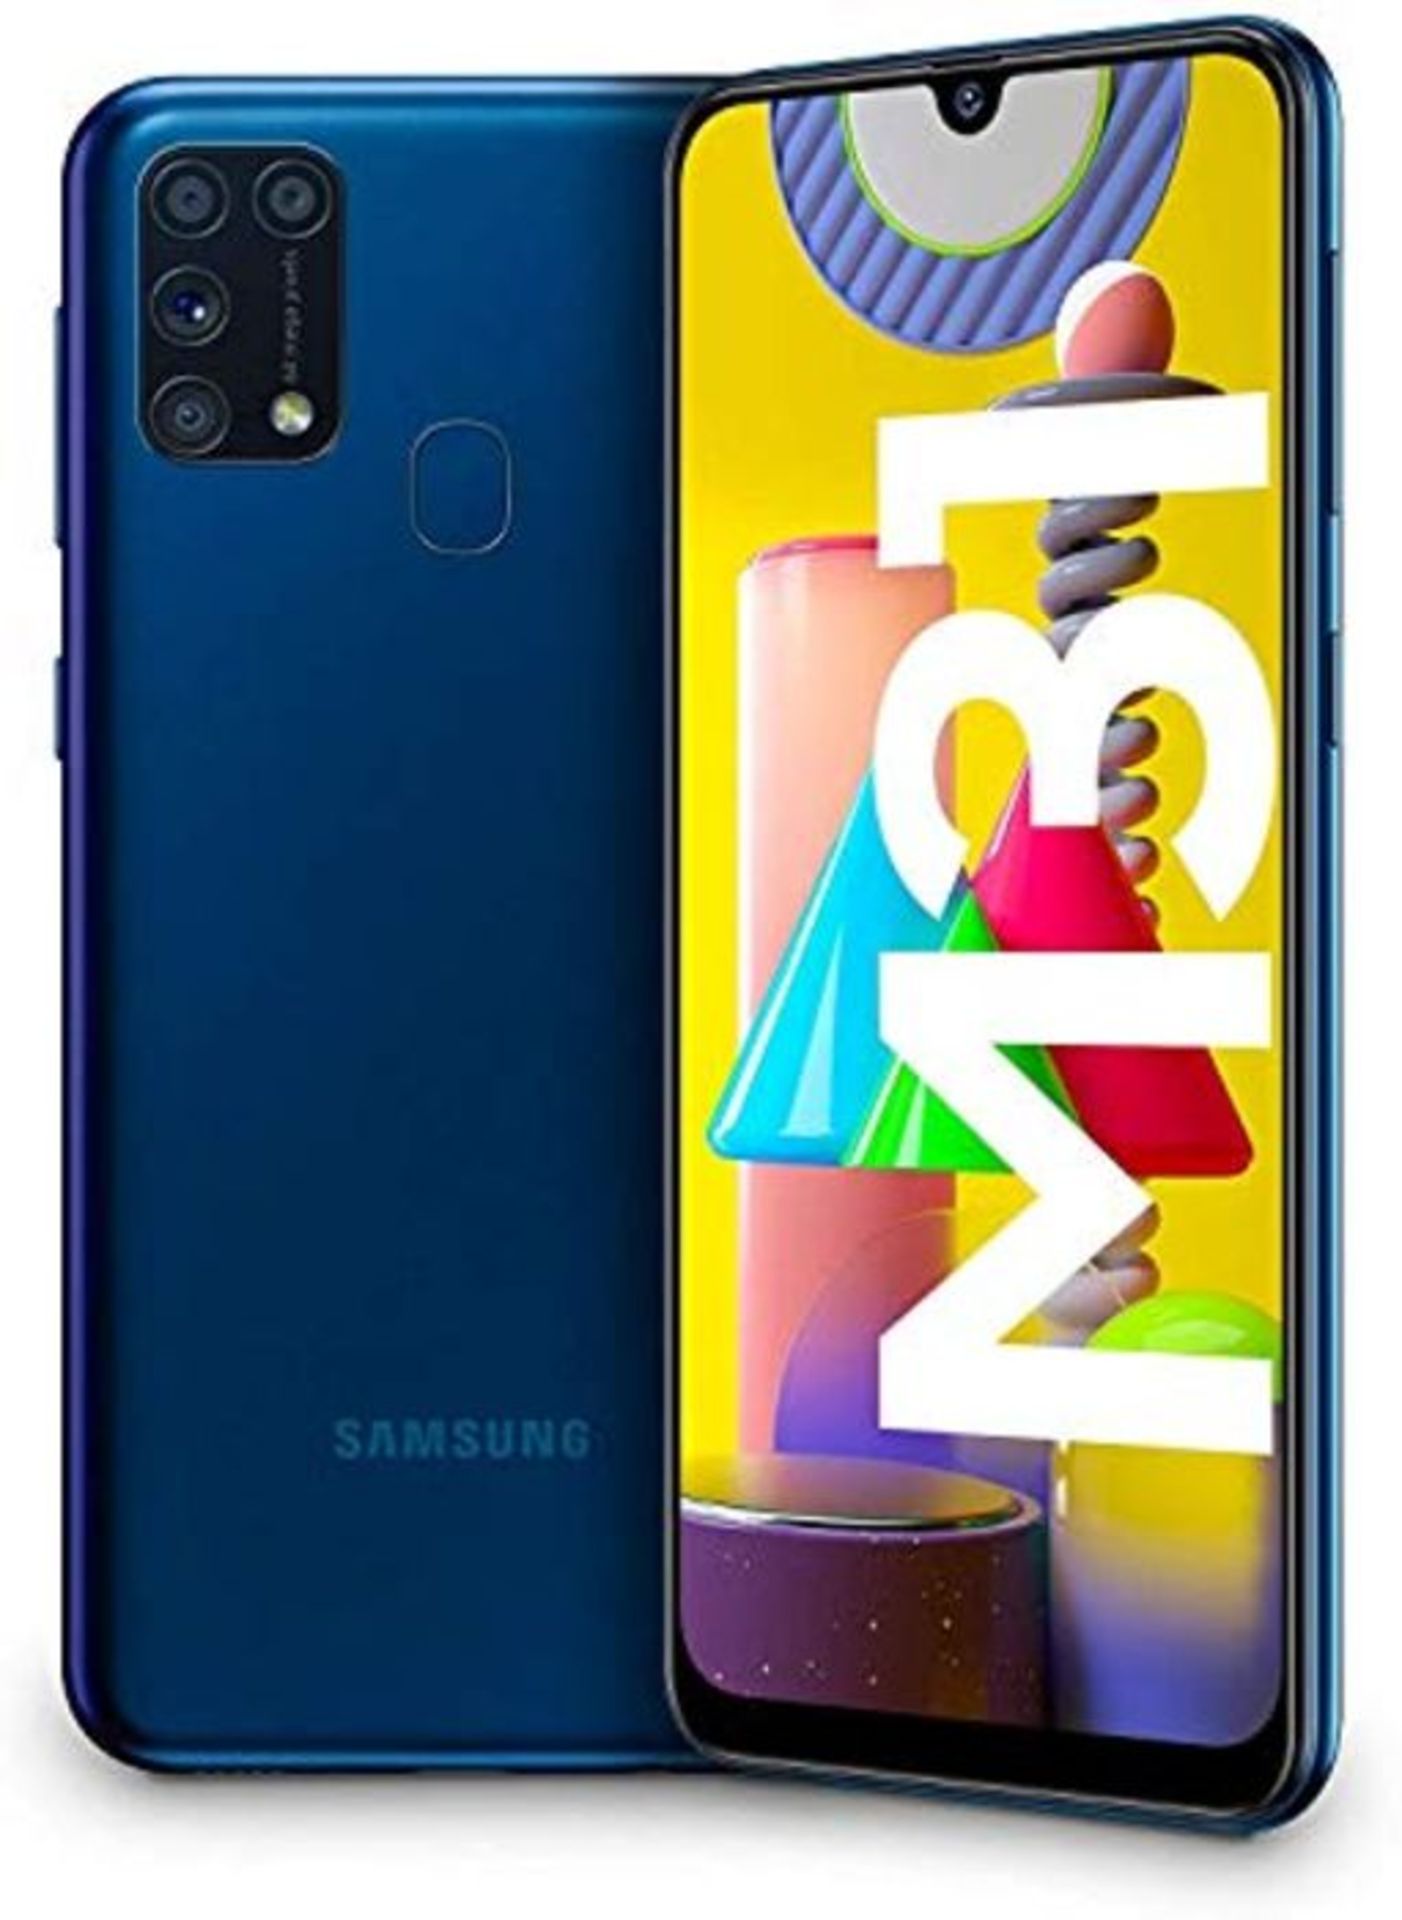 RRP £245.00 Samsung Galaxy M31 Mobile Phone; Sim Free Smartphone - Blue [Amazon Exclusive] (UK Ver